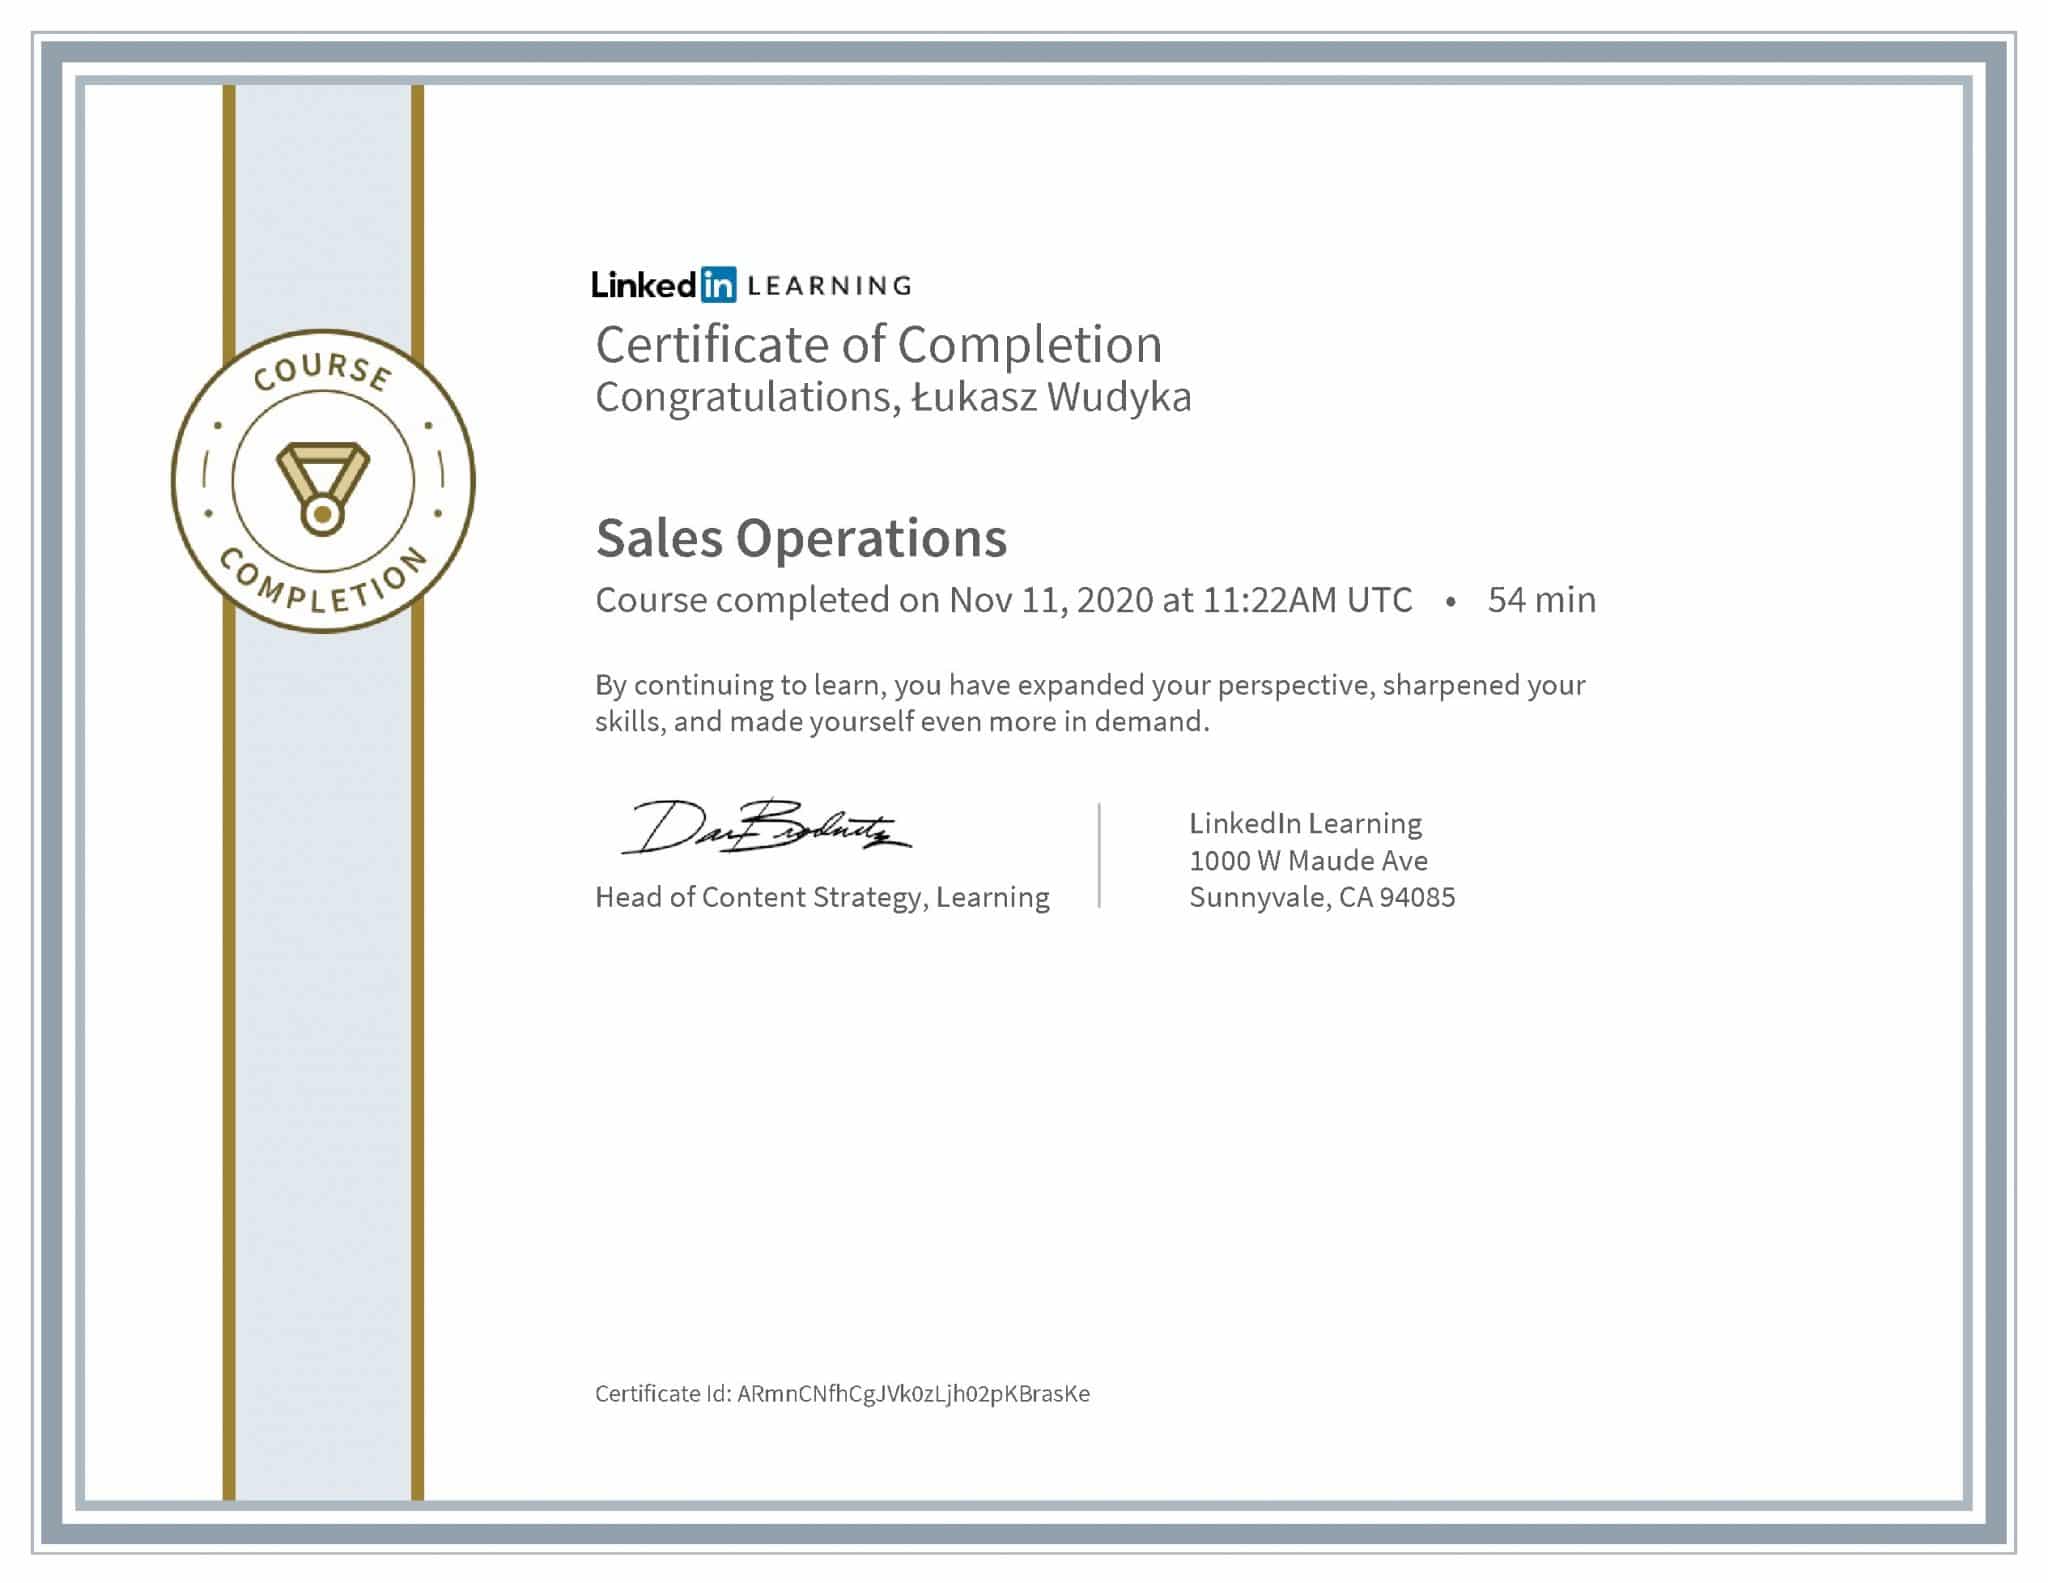 Łukasz Wudyka certyfikat LinkedIn Sales Operations